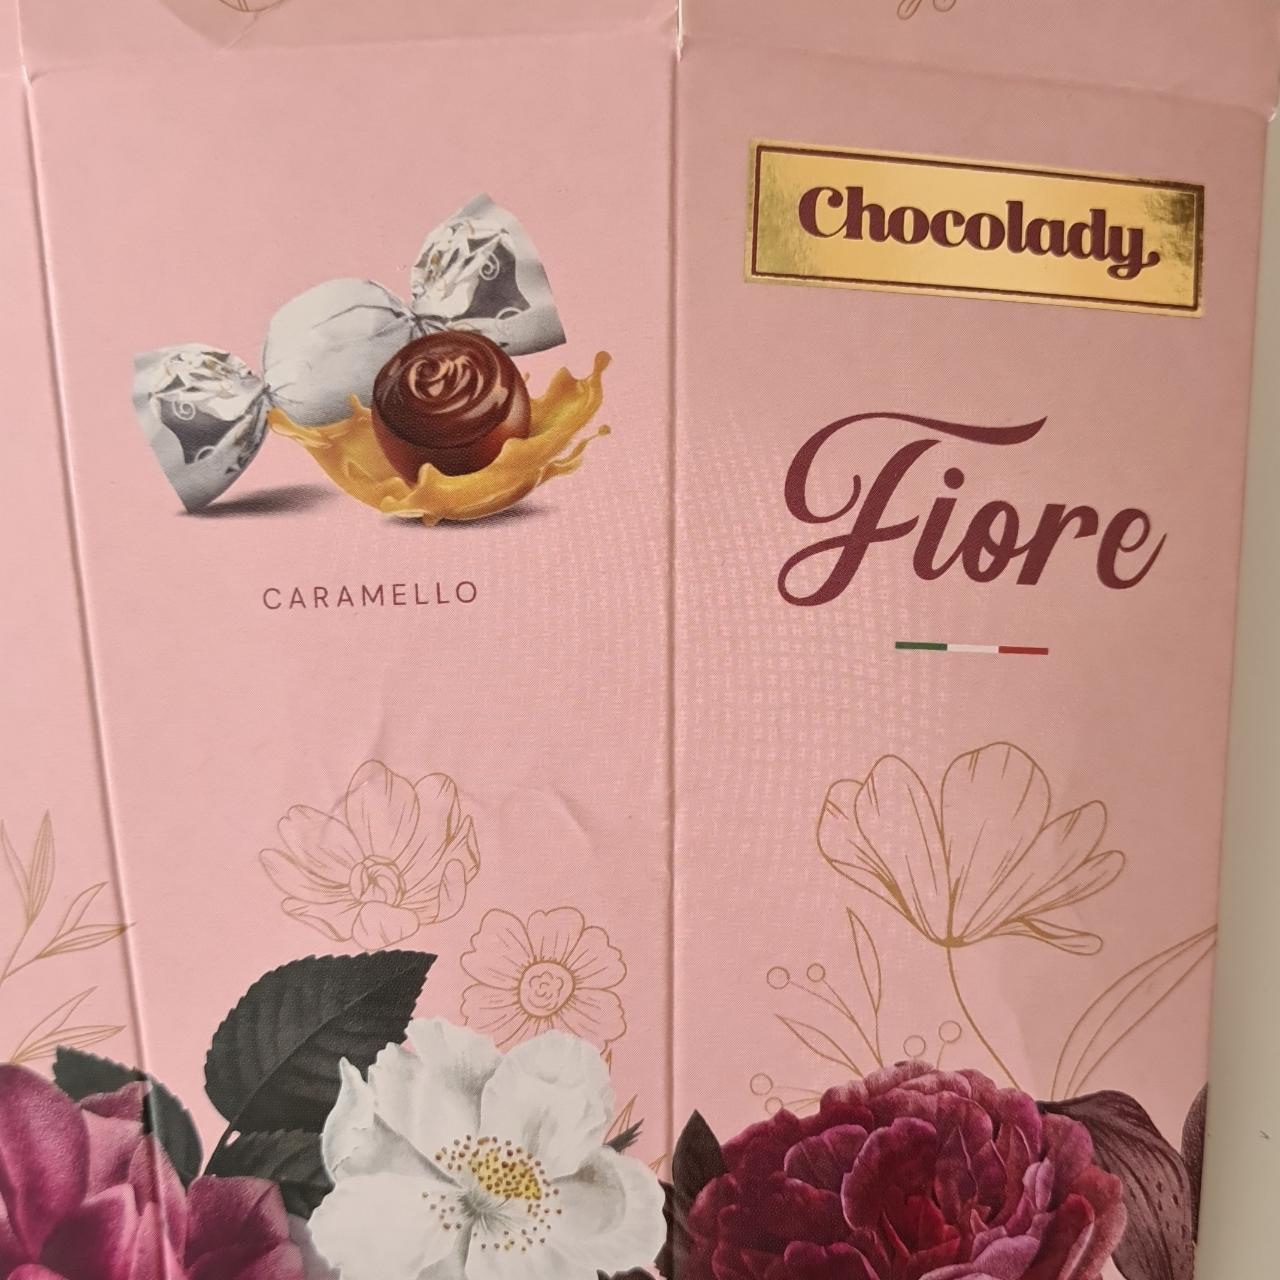 Képek - Fiore Caramello Chocolady